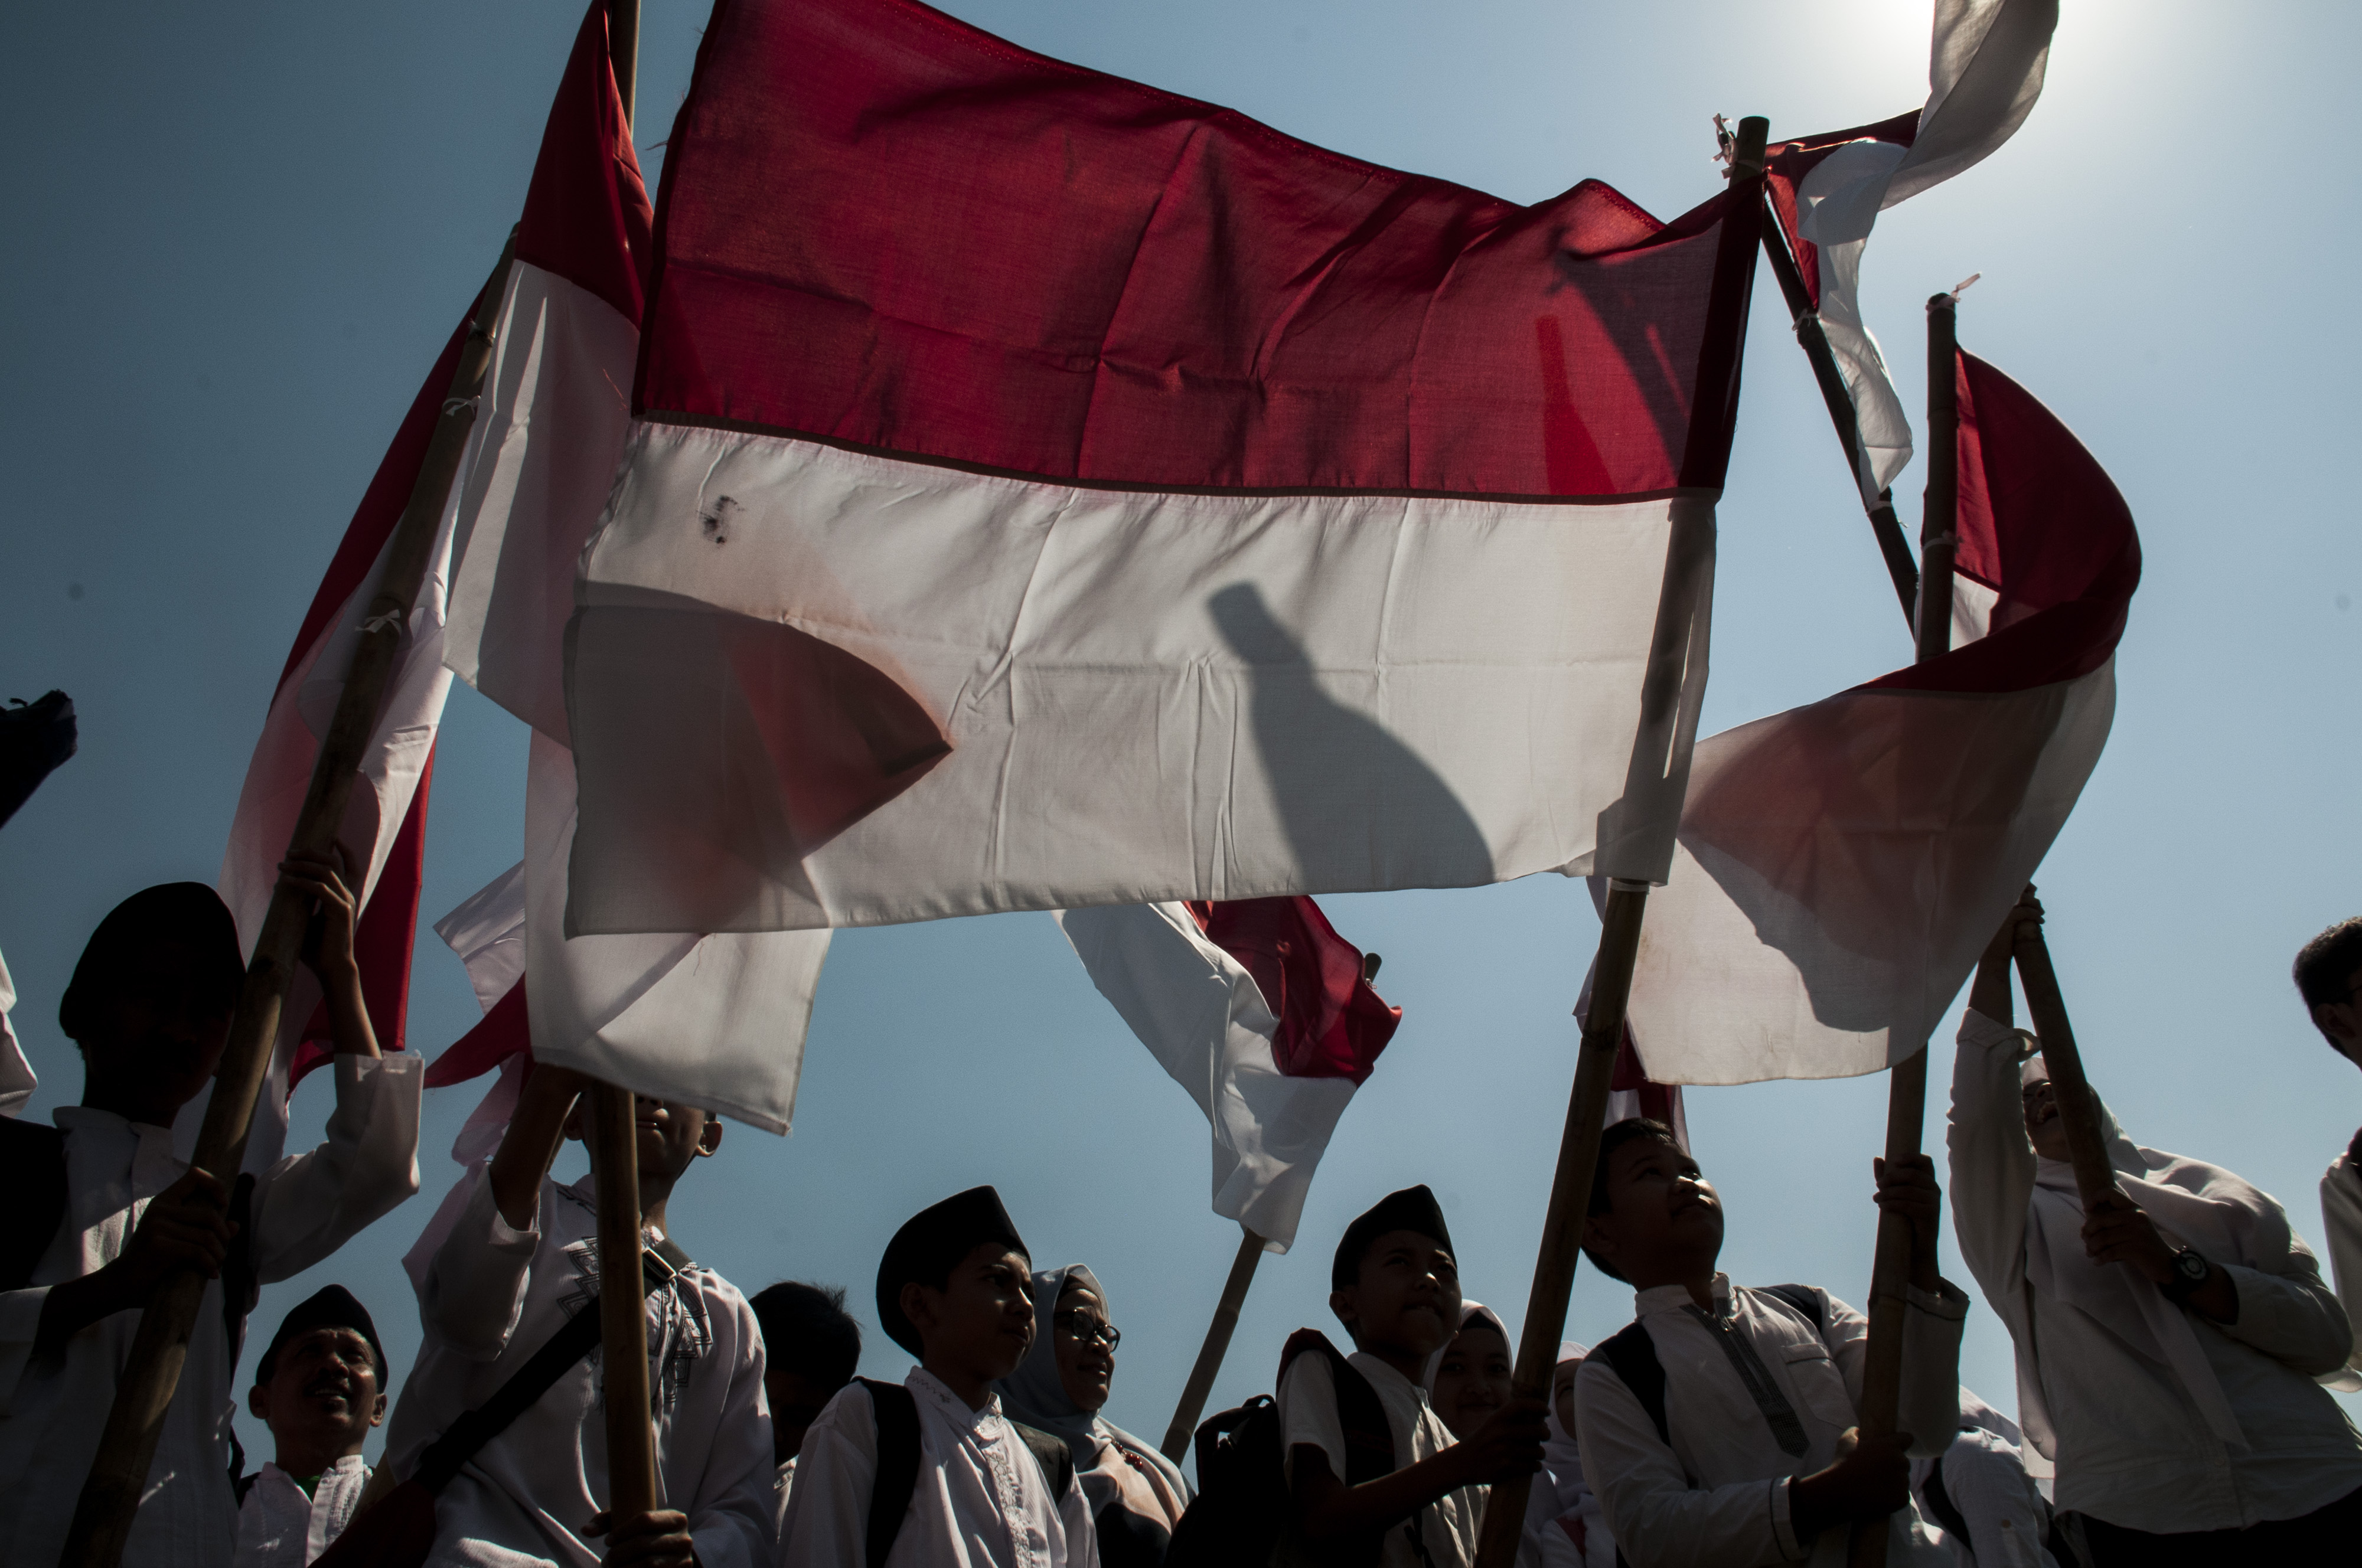 Sejumlah santri membawa bendera merah putih saat mengikuti upacara Peringatan Hari Santri Nasional Tingkat Provinsi Jawa Barat 2019 di Lapangan Gasibu, Bandung, Jawa Barat, Senin (22/10/2019)/ANTARA FOTO/Novrian Arbi